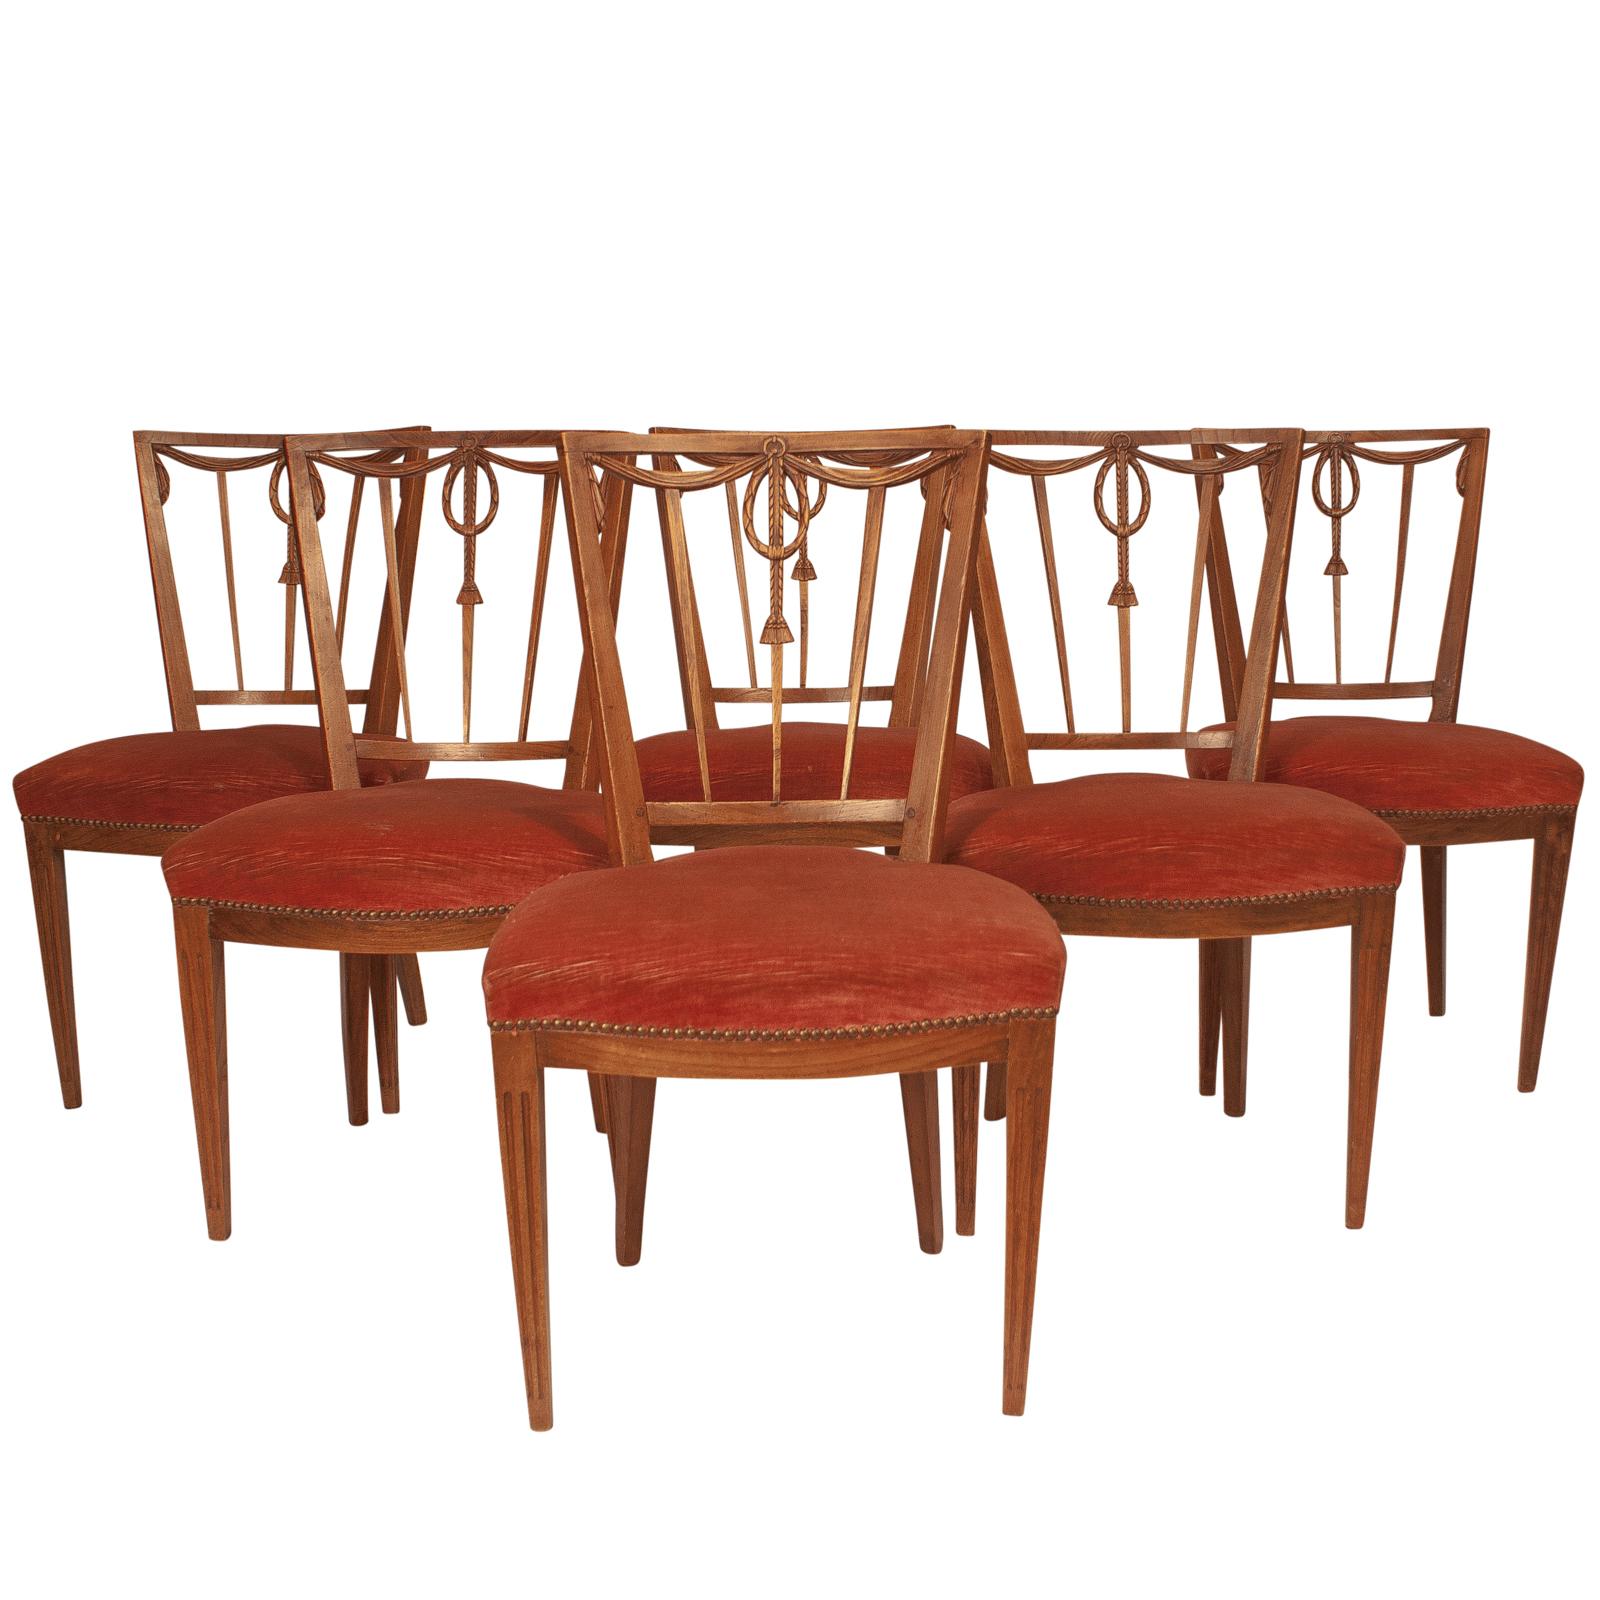 Set of 6 Dining Chairs, Belgium, circa 1800